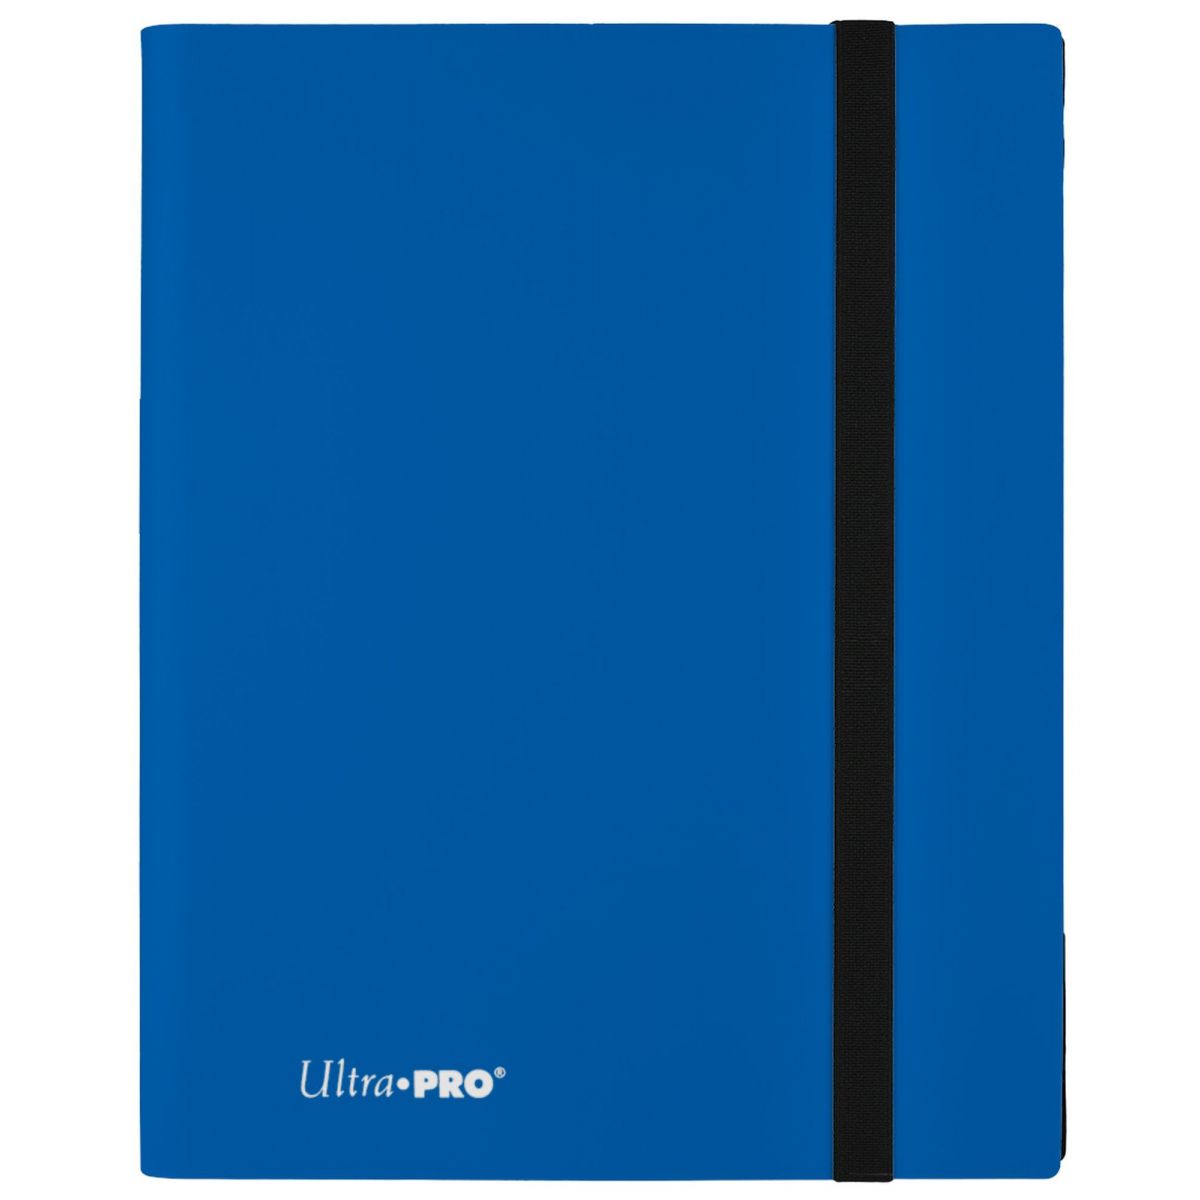 Ultra Pro - Pro Binder - Eclipse - 9 Cases - Bleu / Pacific Blue (360)